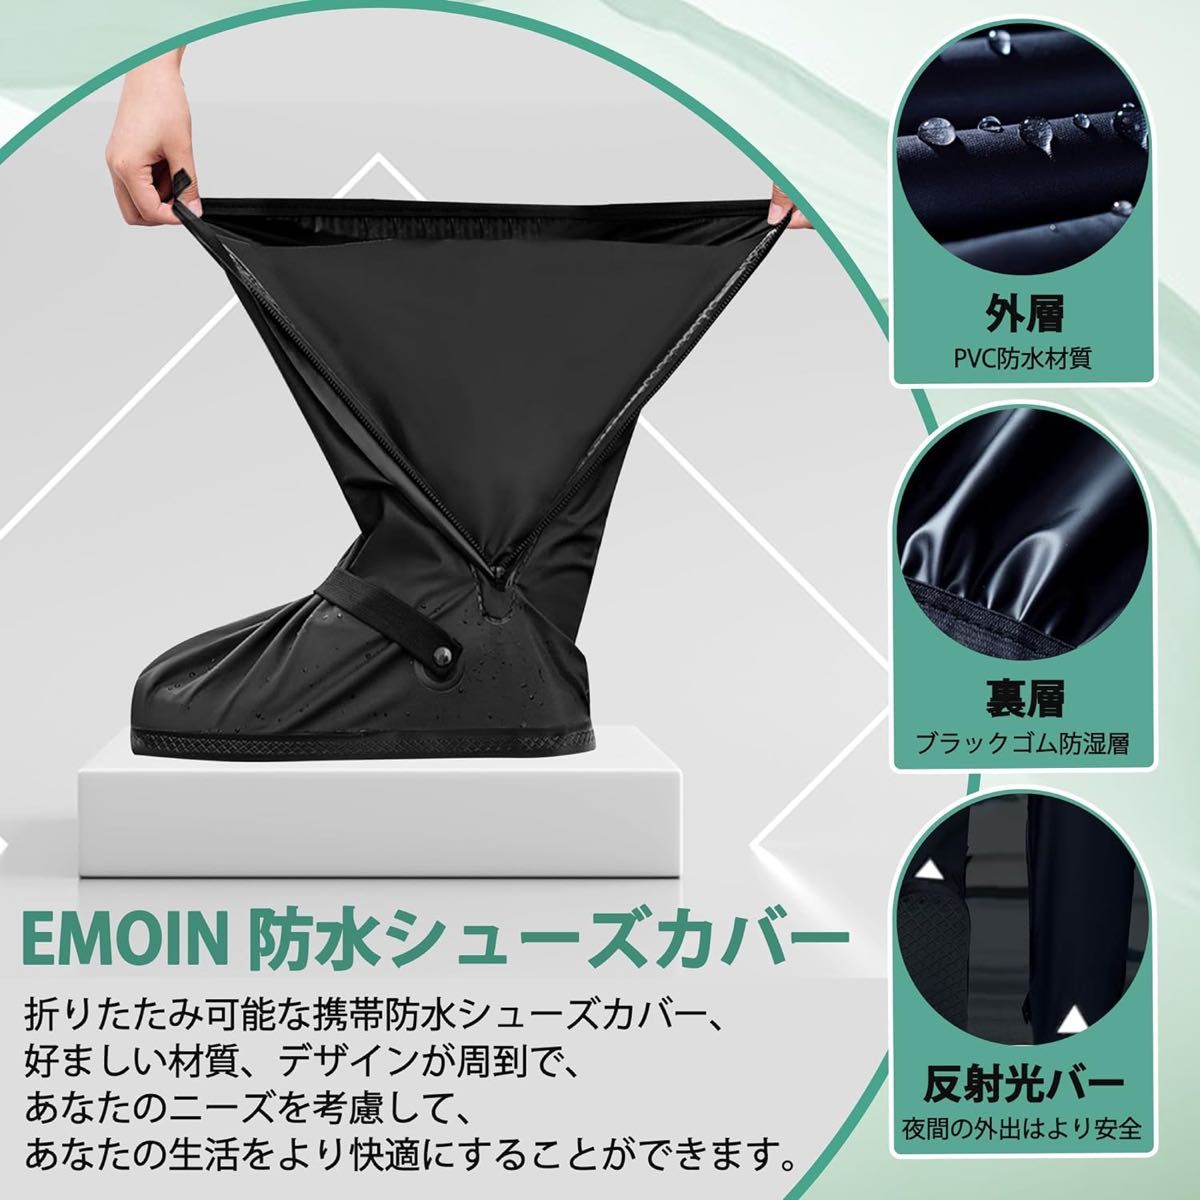 [Emoin] シューズカバー レインシューズカバー 靴カバー 防水  シリコン ブラック 男女兼用